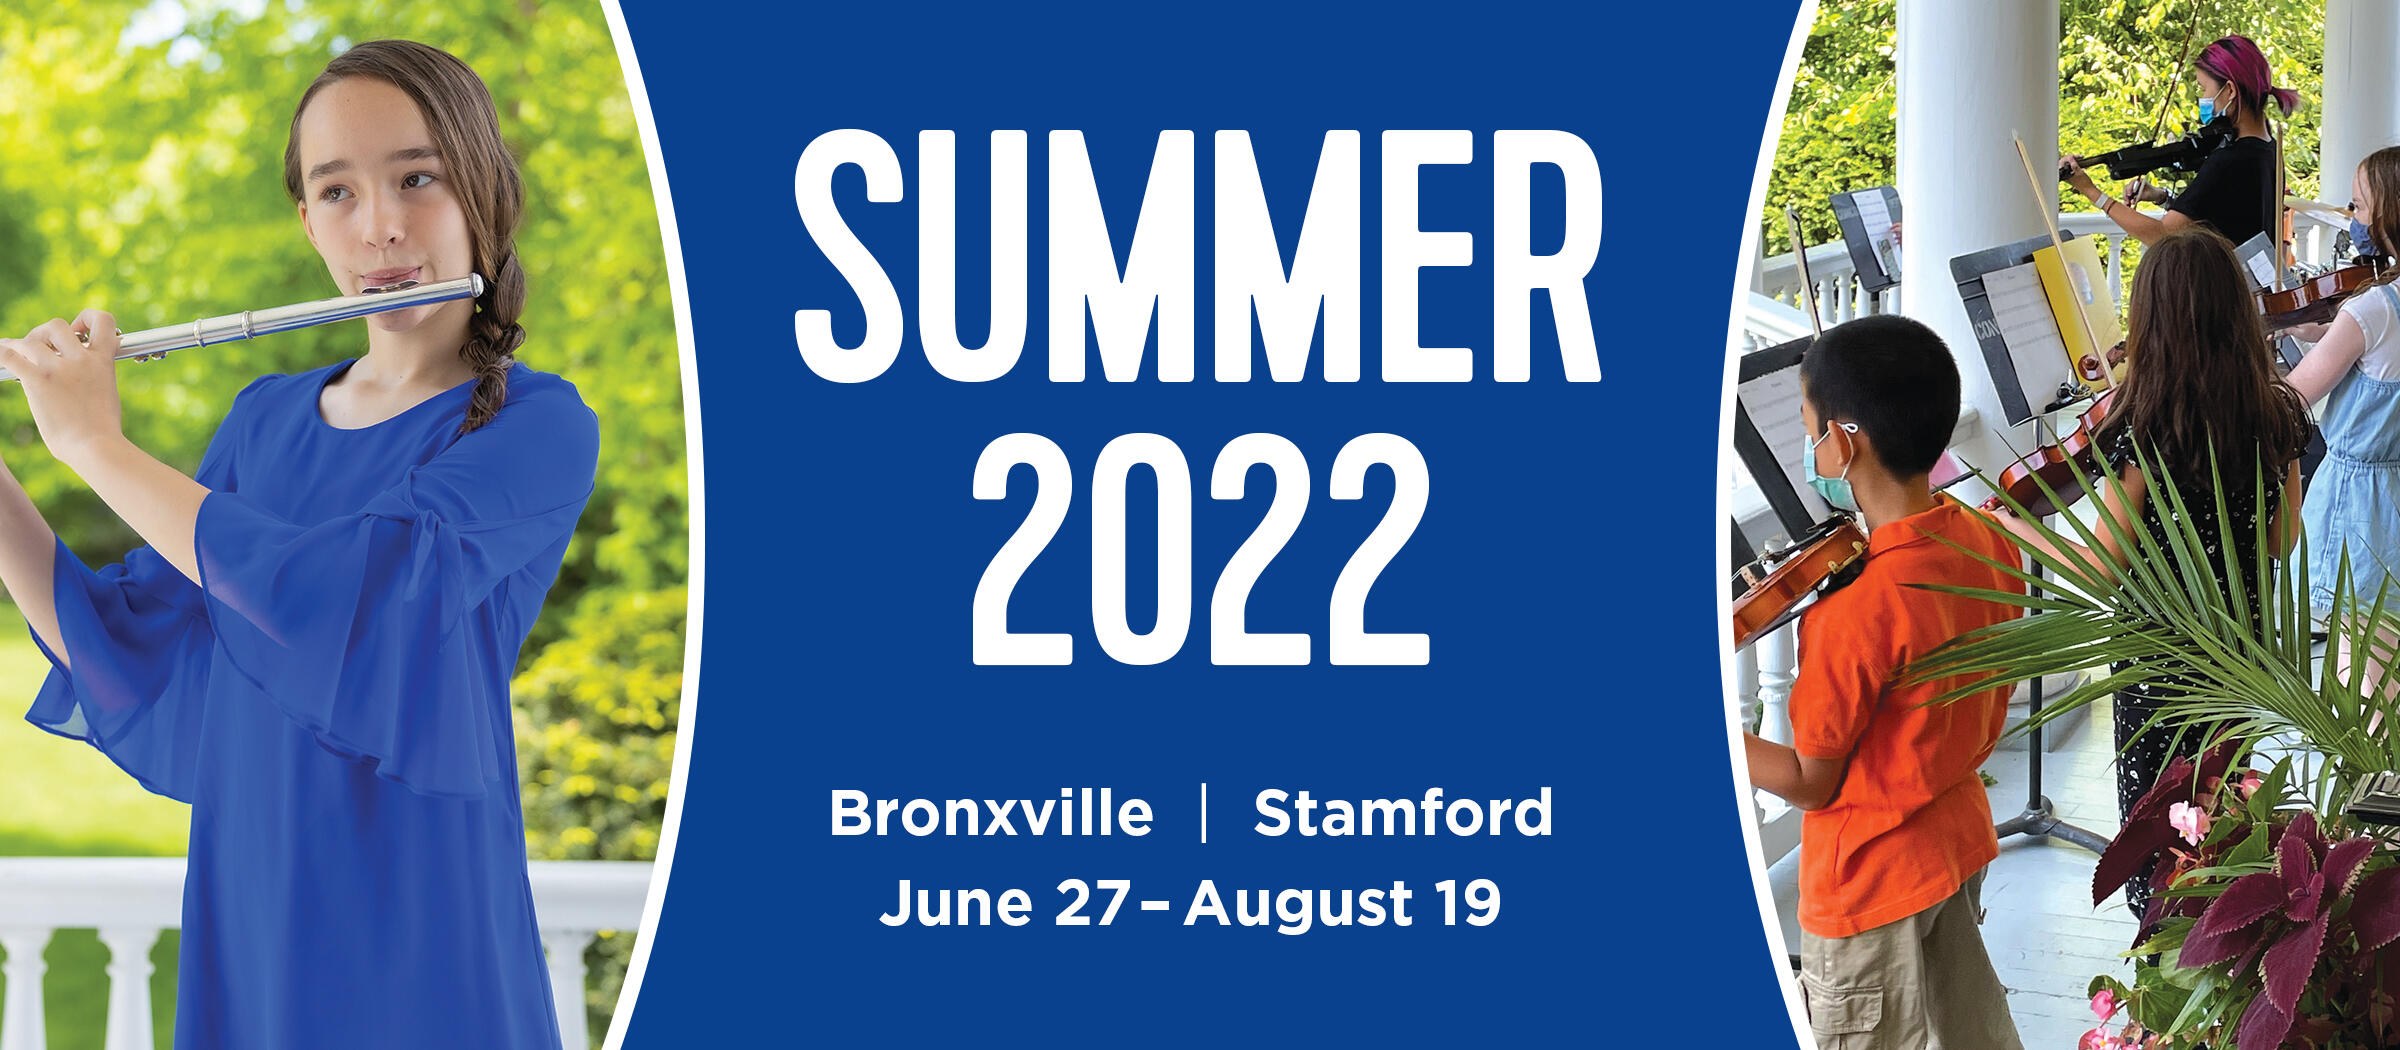 Summer Camp 2022 - June 27 through August 19